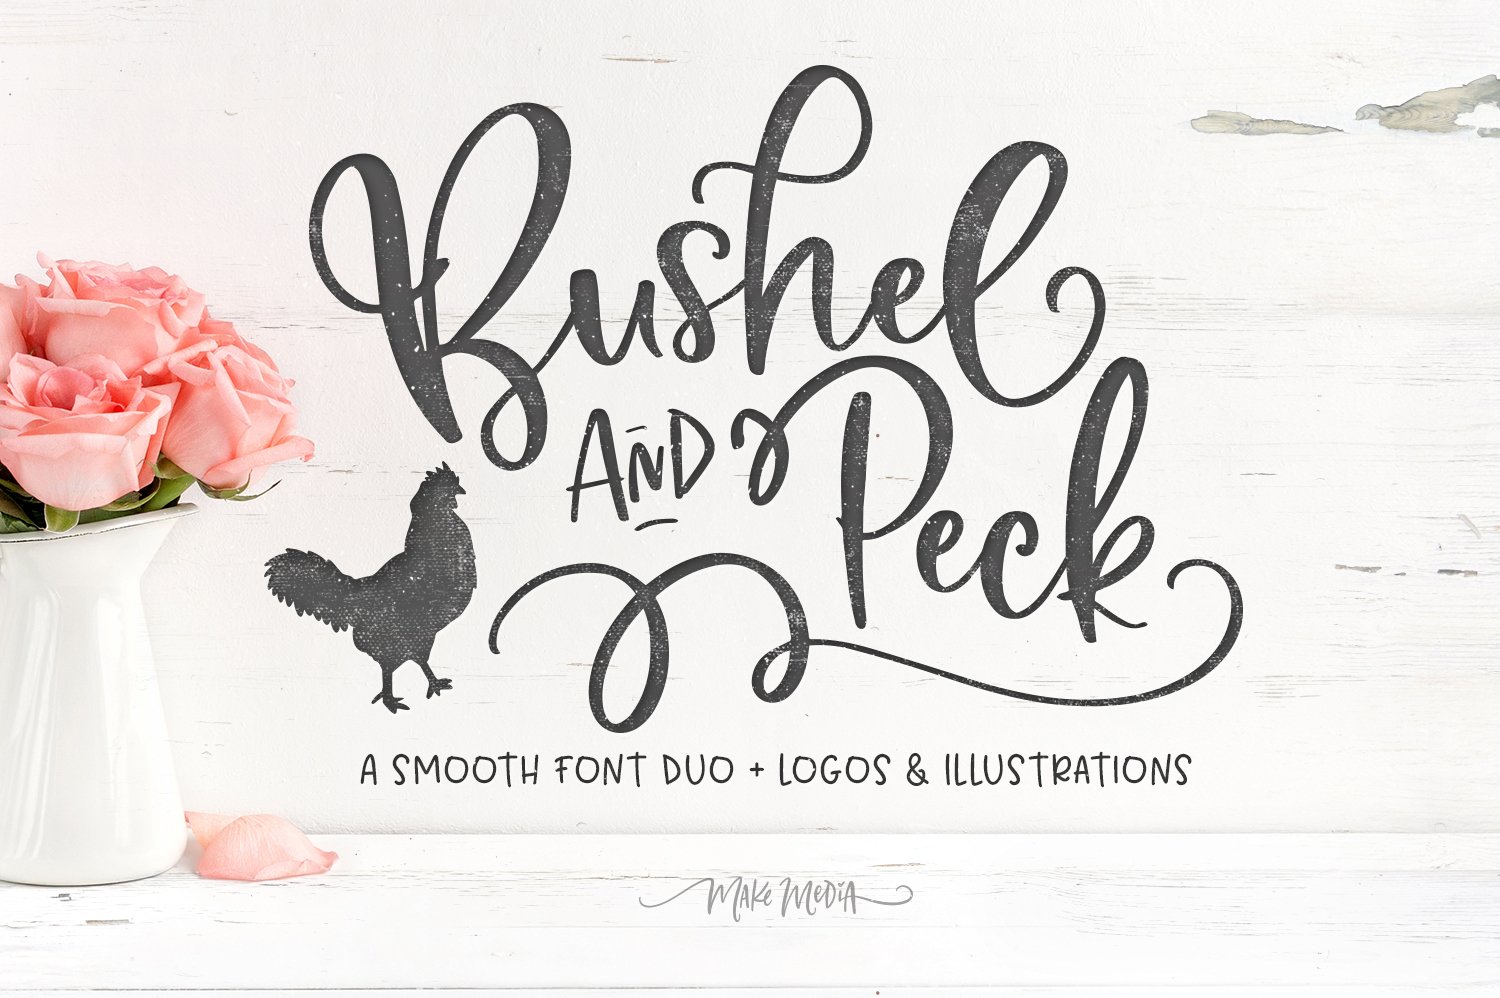 Bushel and Peck Fonts and Logos